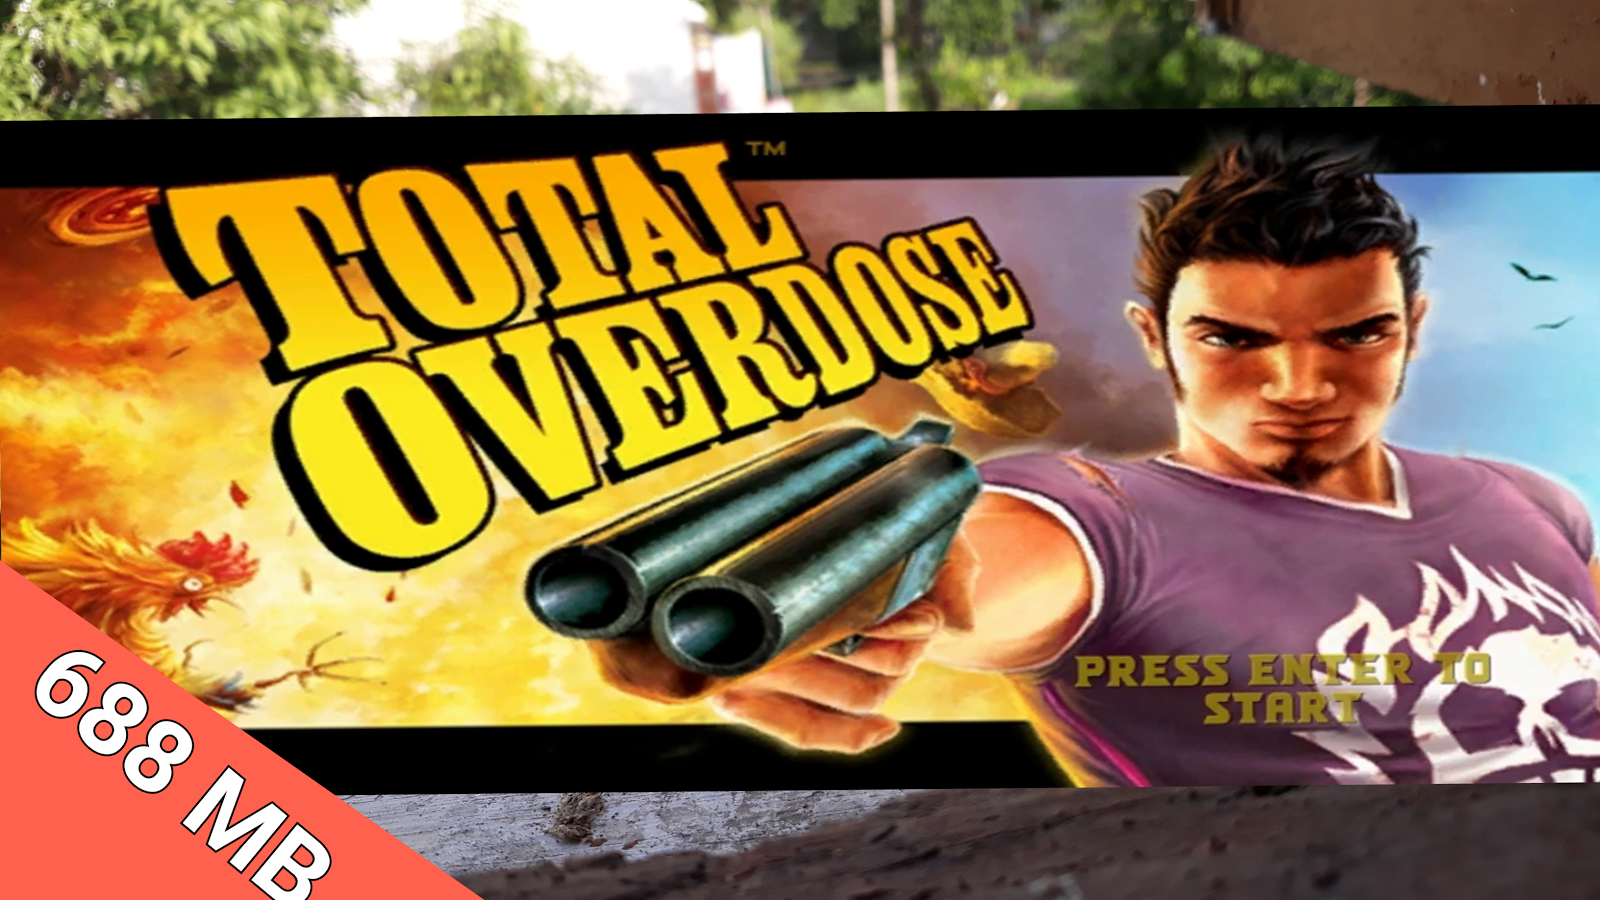 total overdose game compressed download